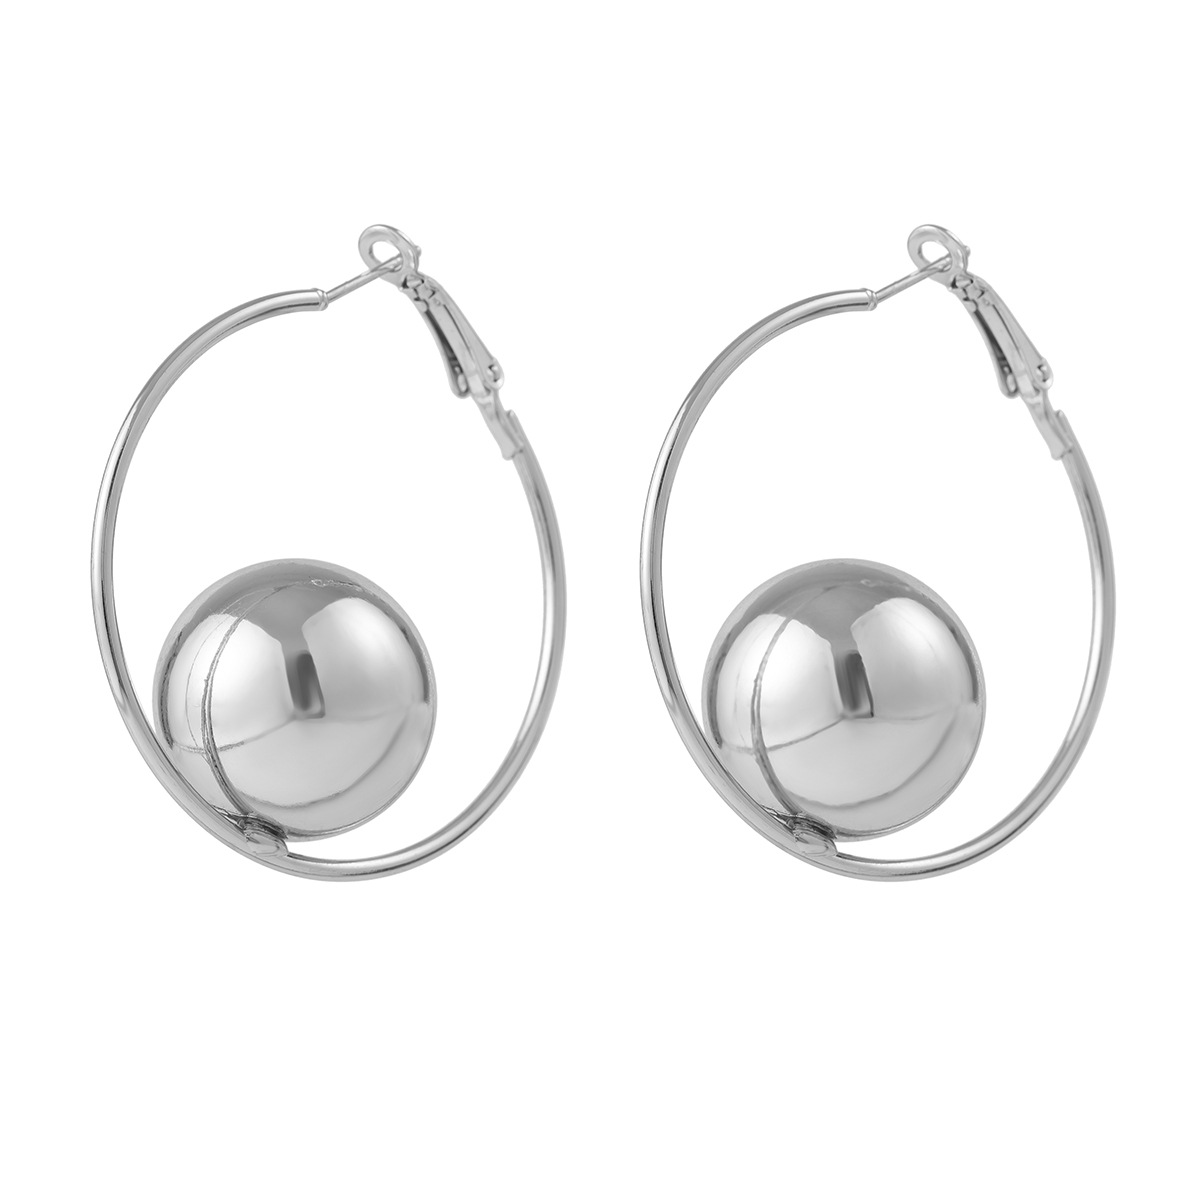 4:Platinum color earrings